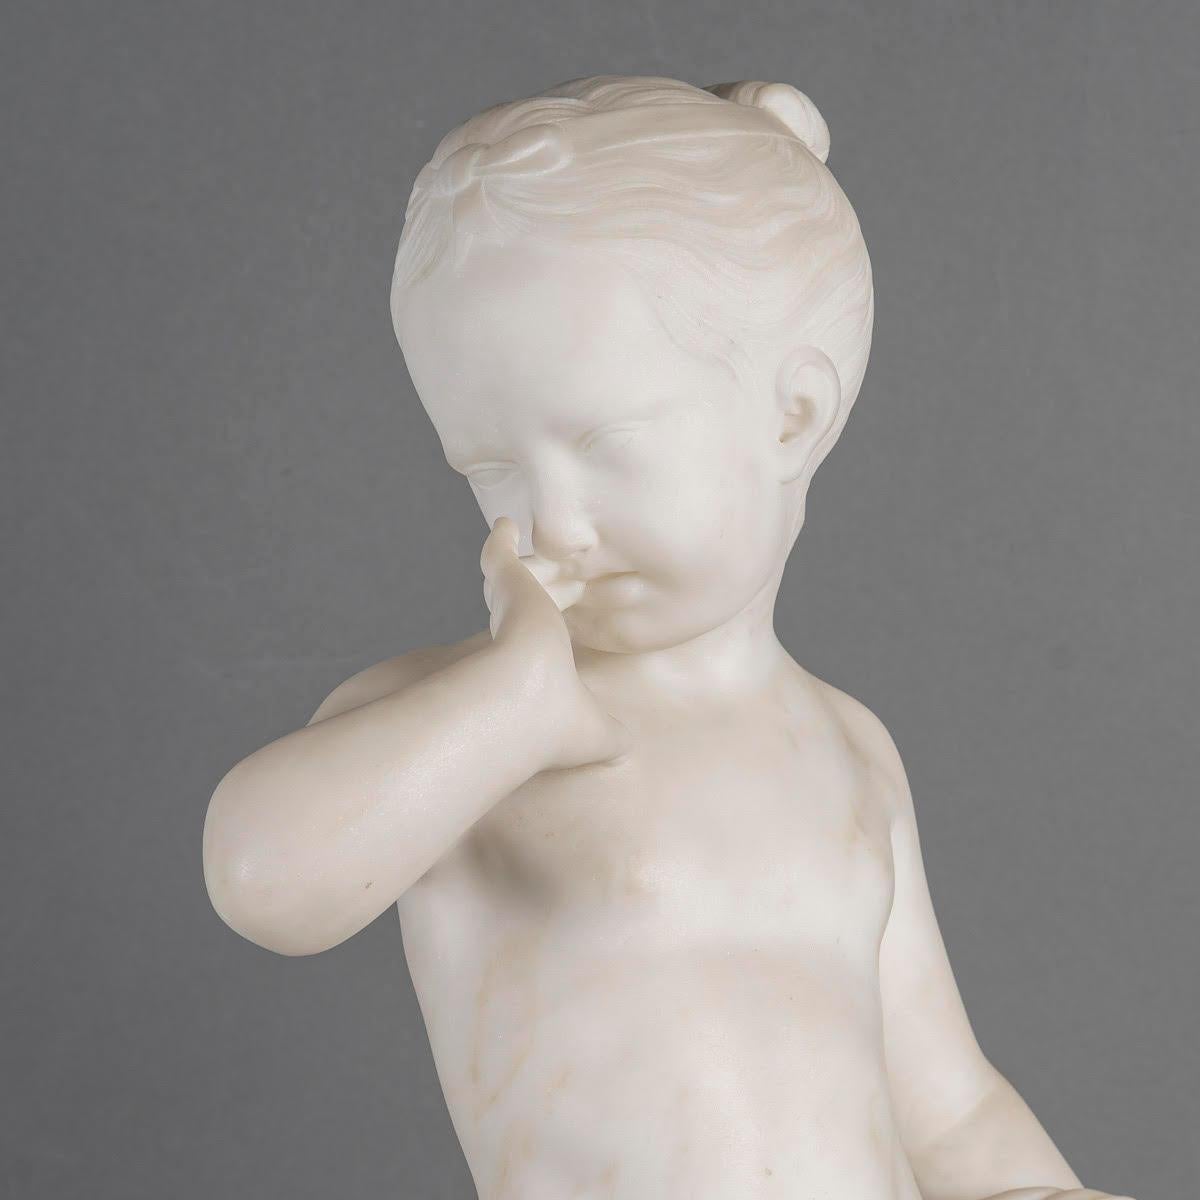 Sculpture en marbre blanc de Carrare, époque Napoléon III, XIXe siècle.

Sculpture en marbre blanc de Carrare représentant un enfant portant un nid, époque Napoléon III, XIXe siècle.  
h : 58cm, l : 26cm, p : 19cm